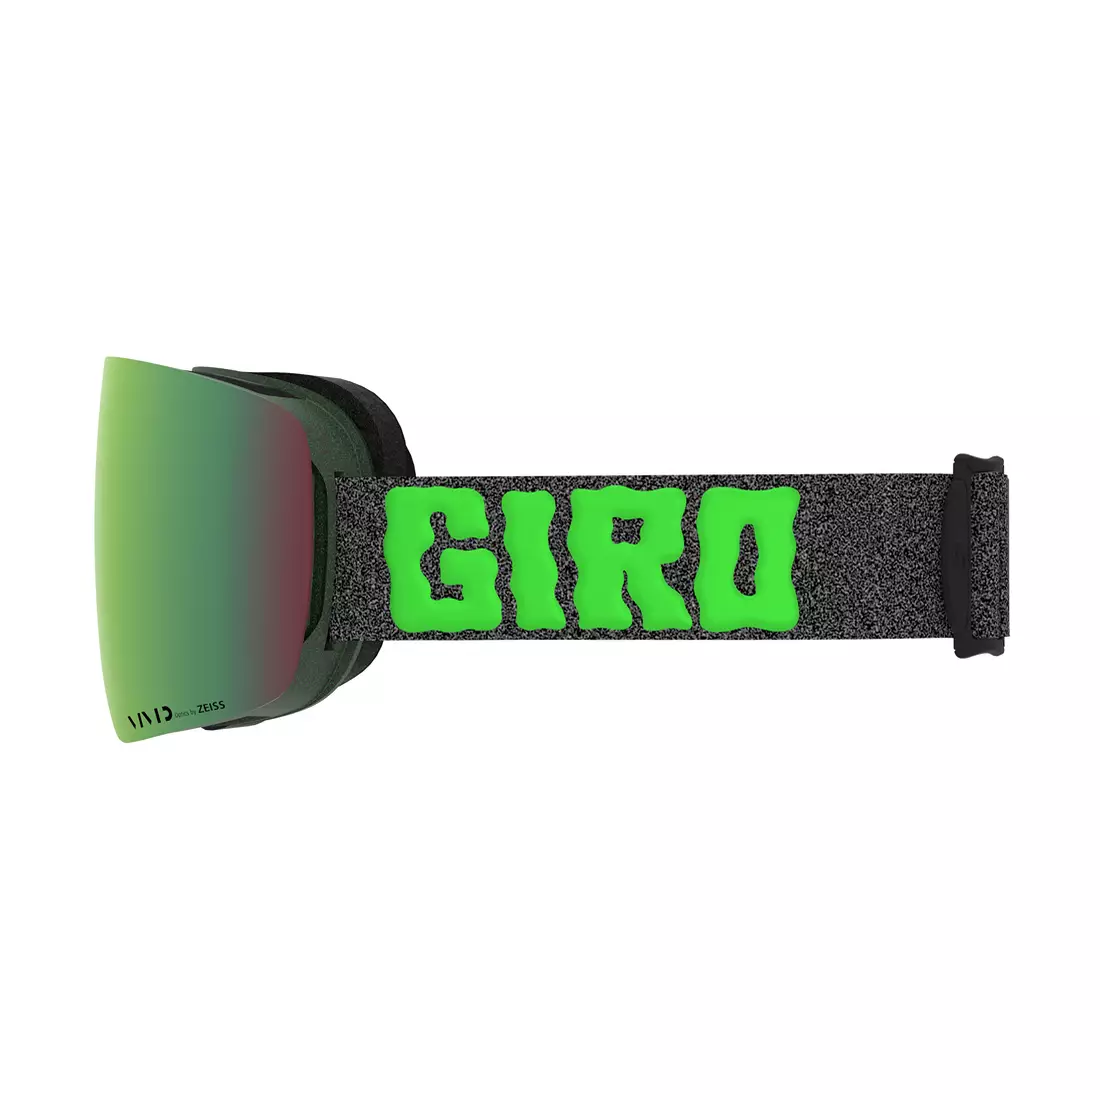 GIRO zimní lyžařské/snowboardové brýle CONTOUR GREEN COSMIC SLIME (VIVID-Carl Zeiss EMERALD 22% S2 + VIVID-Carl Zeiss INFRARED 62% S1) GR-7119486